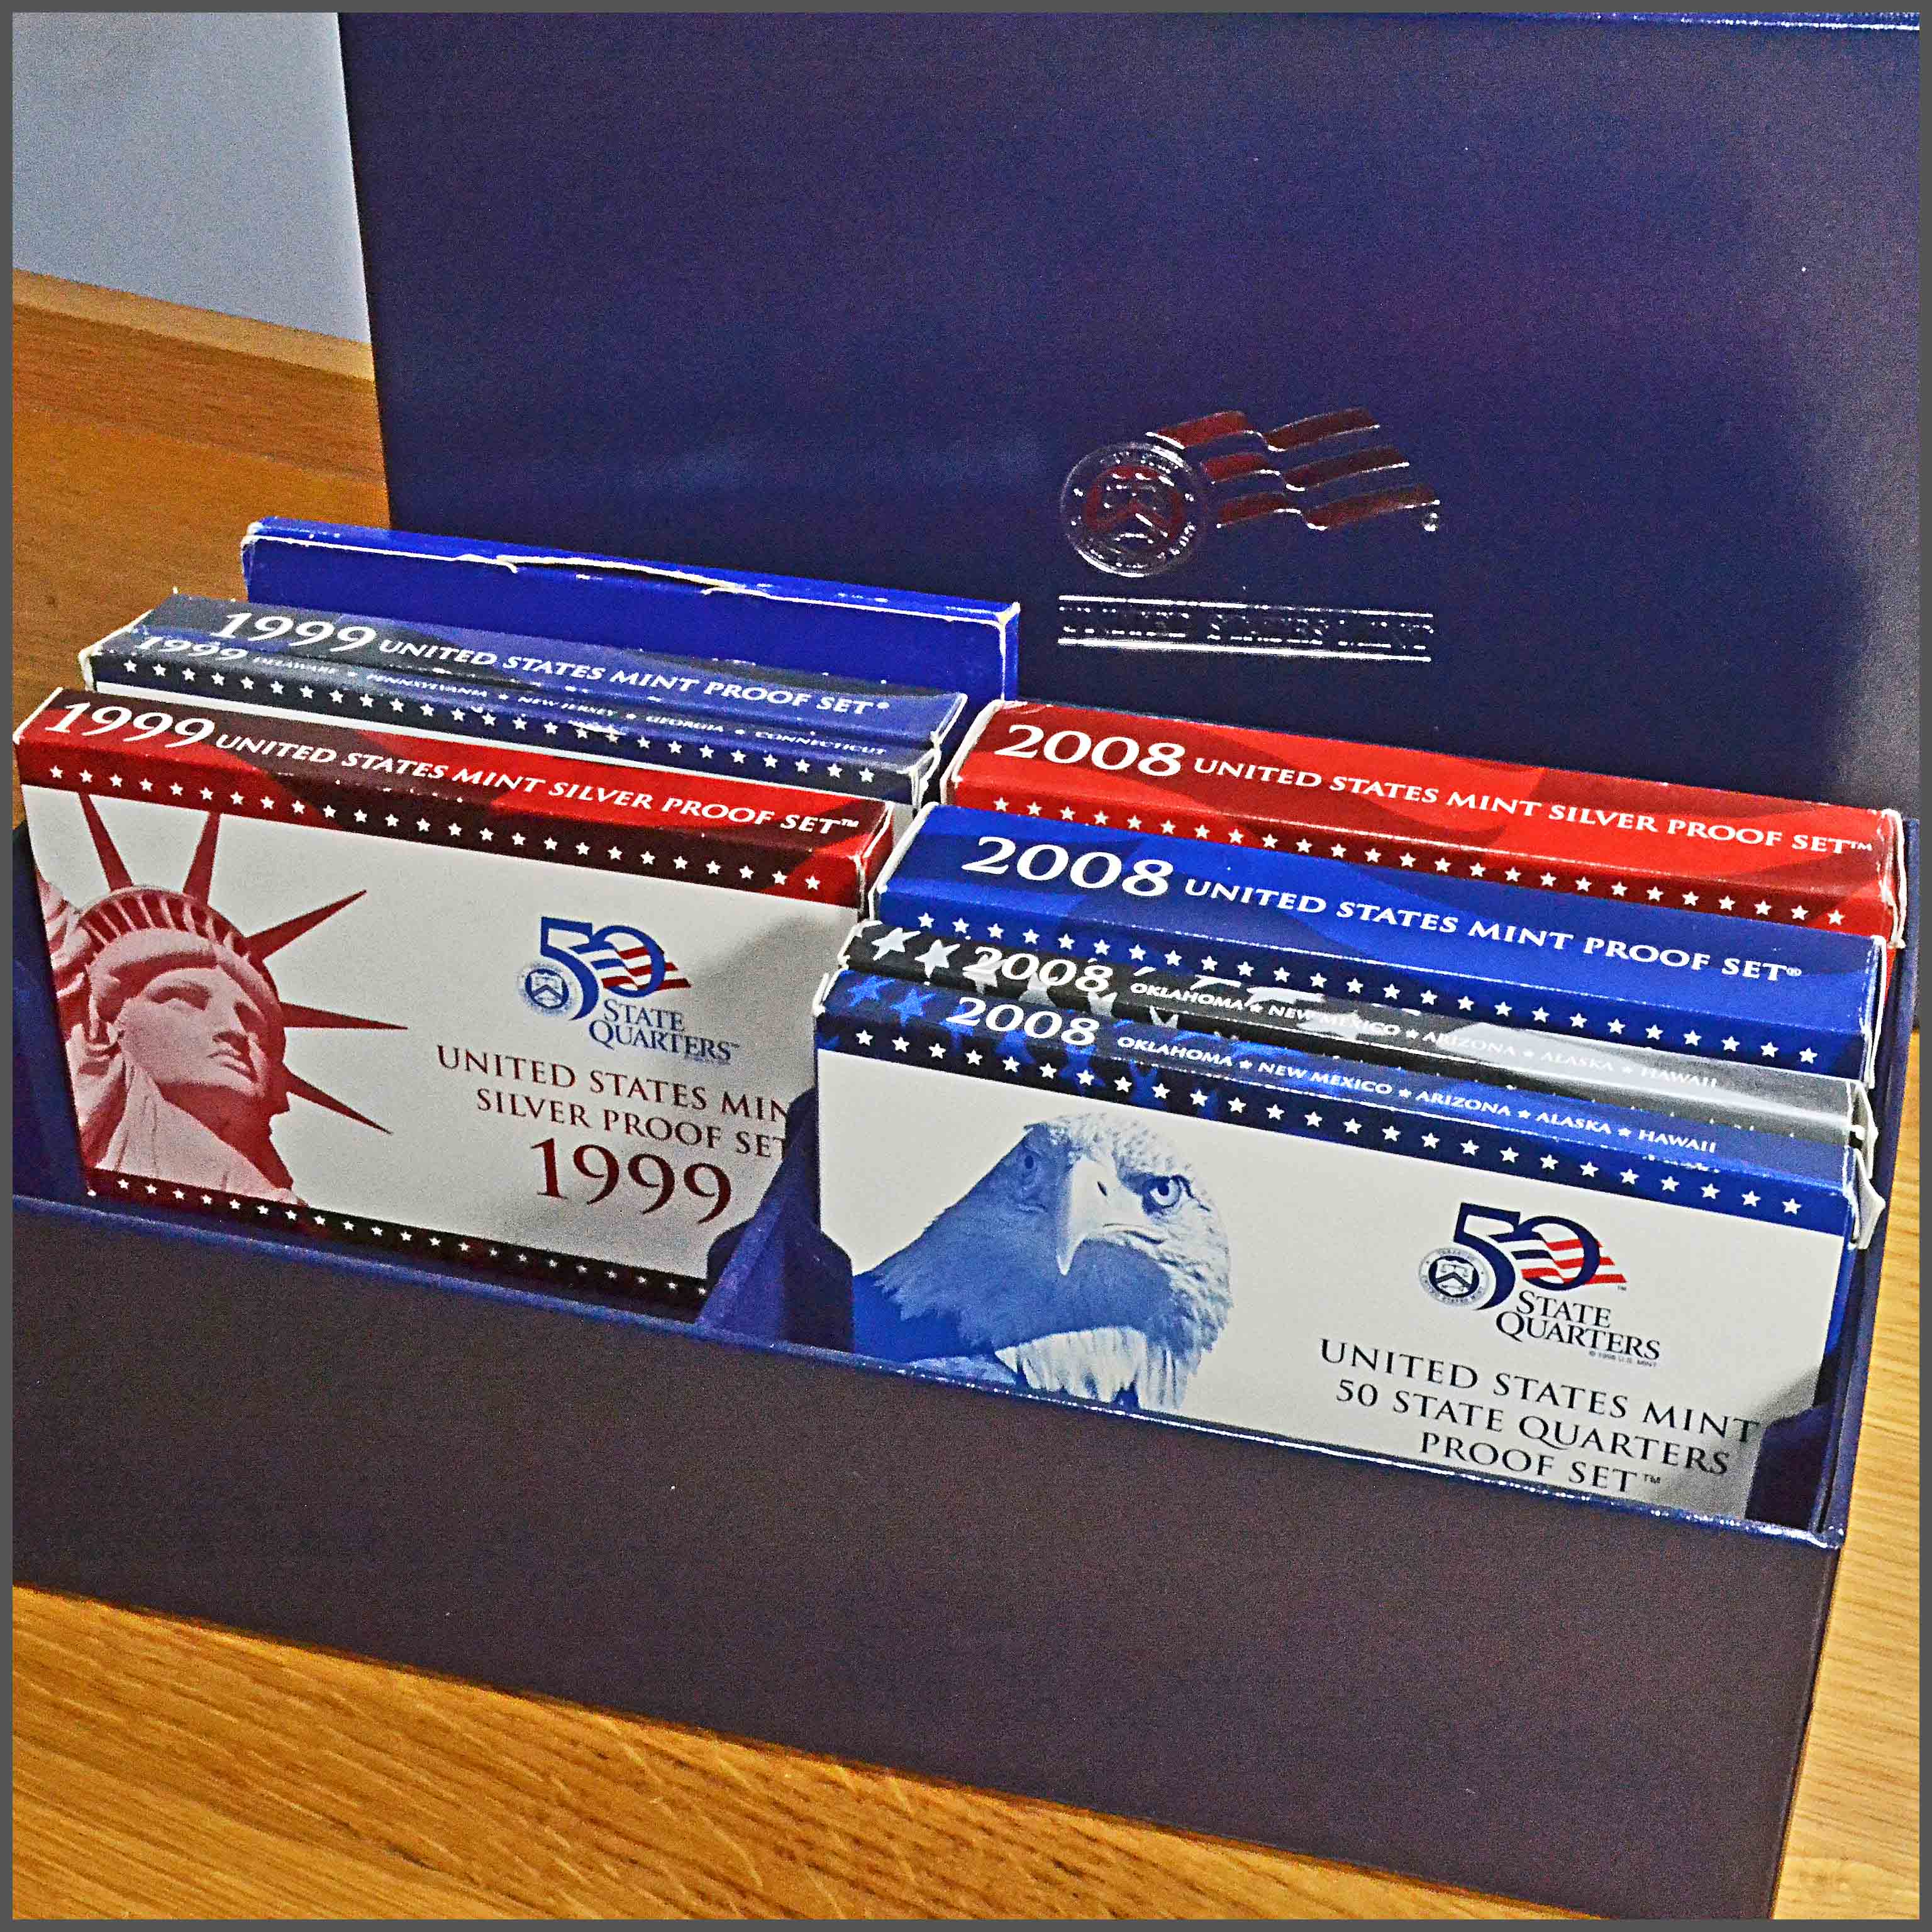 US Mint Proof Sets in Mint Box